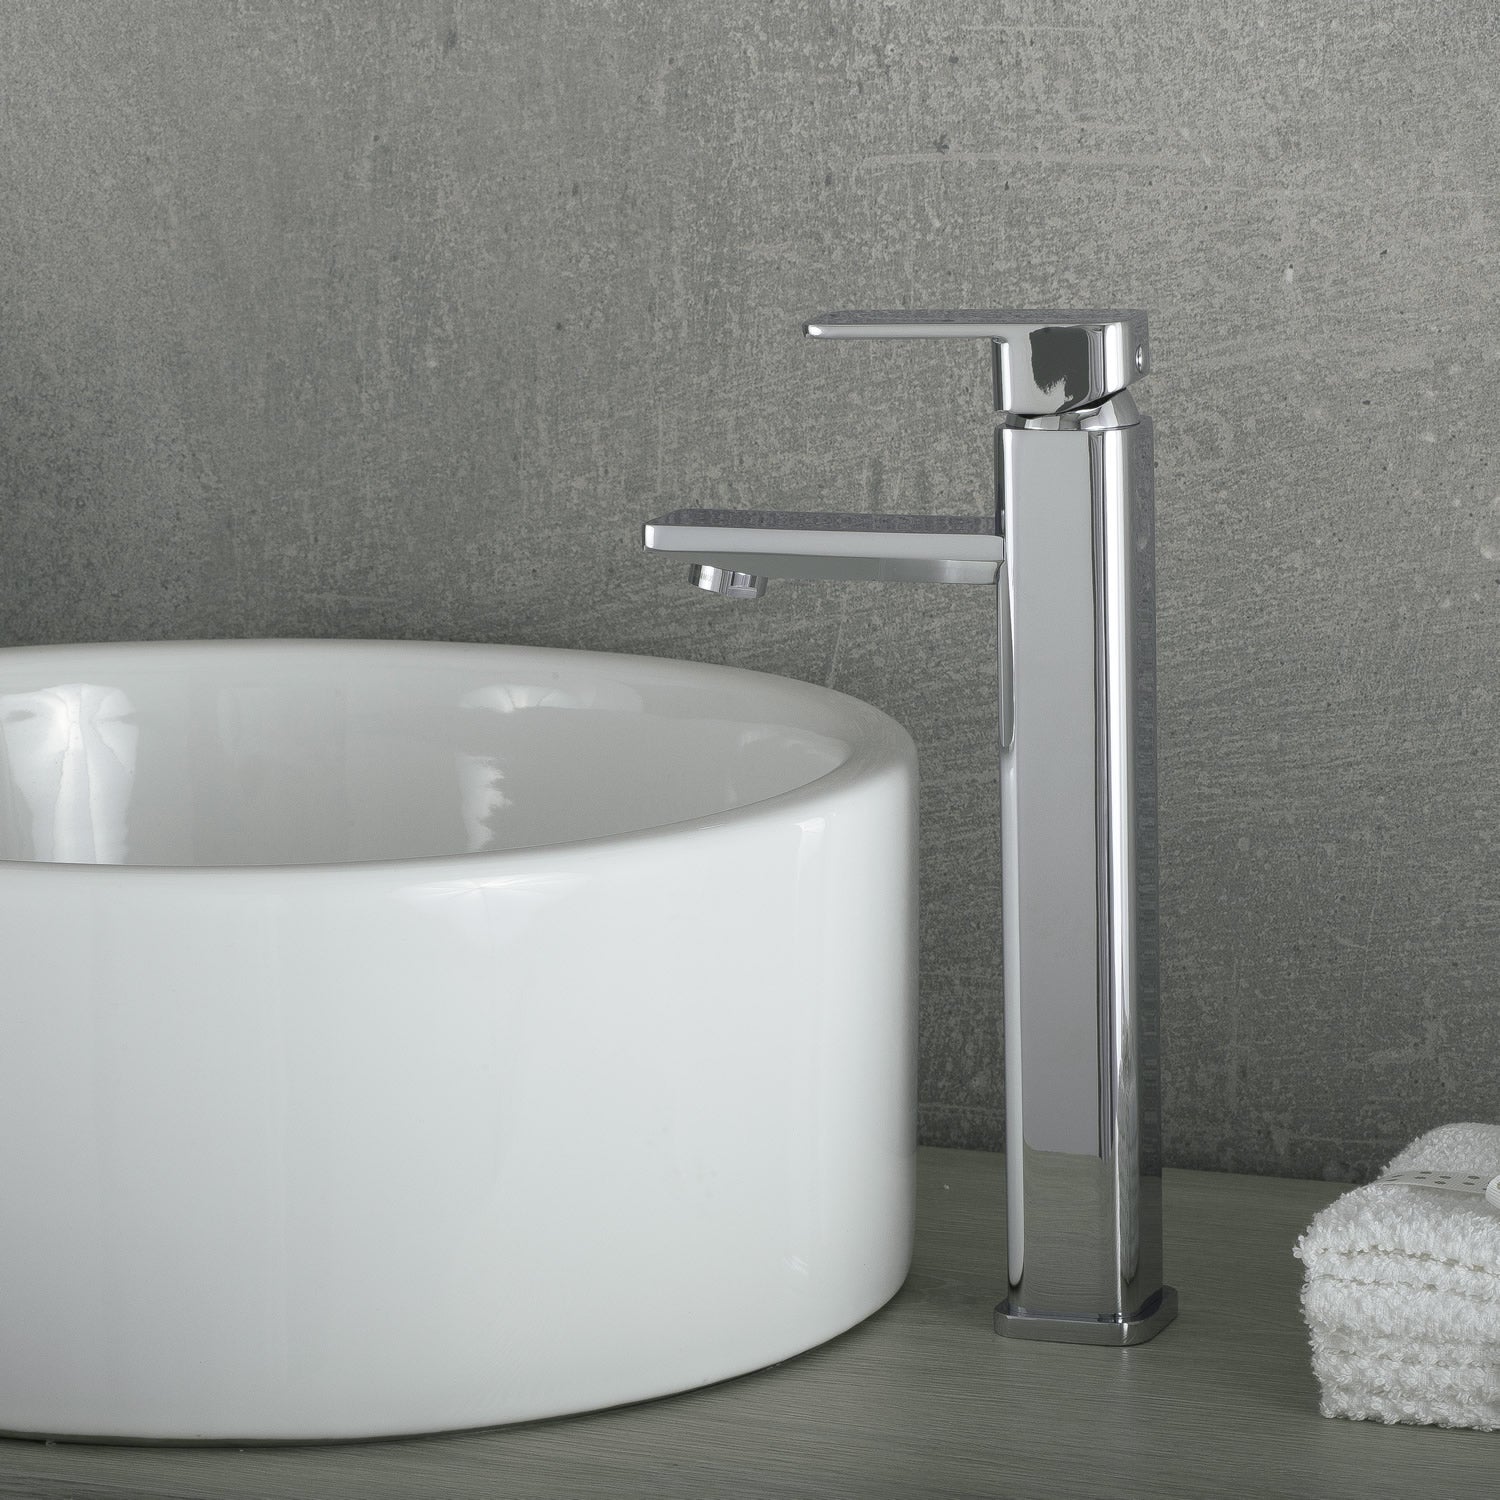 DAX Single Handle Vessel Sink Bathroom Faucet, Brass Body, Chrome Finish, 5-15/16 x 11-15/16 Inches (DAX-8510B-CR)